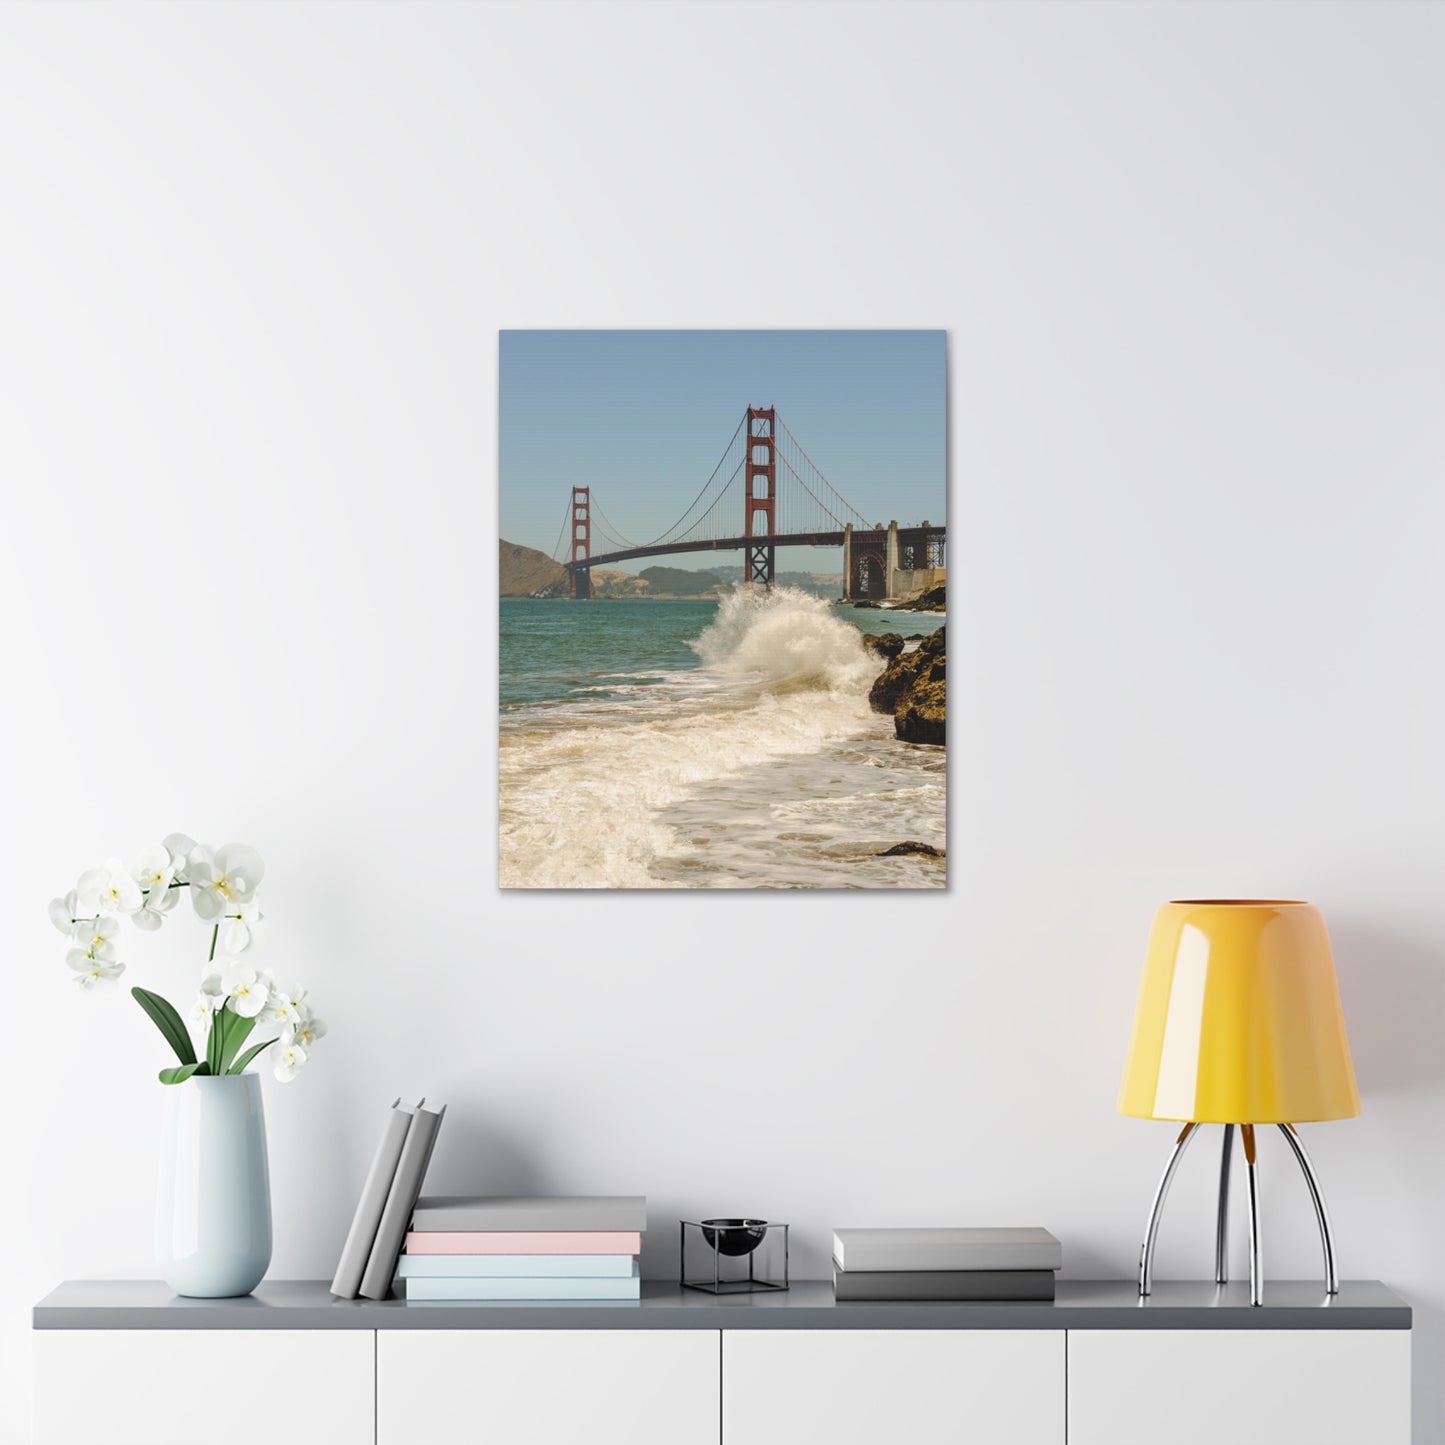 Canvas Print Of Vintage Feel Golden Gate Bridge San Francisco For Wall Art